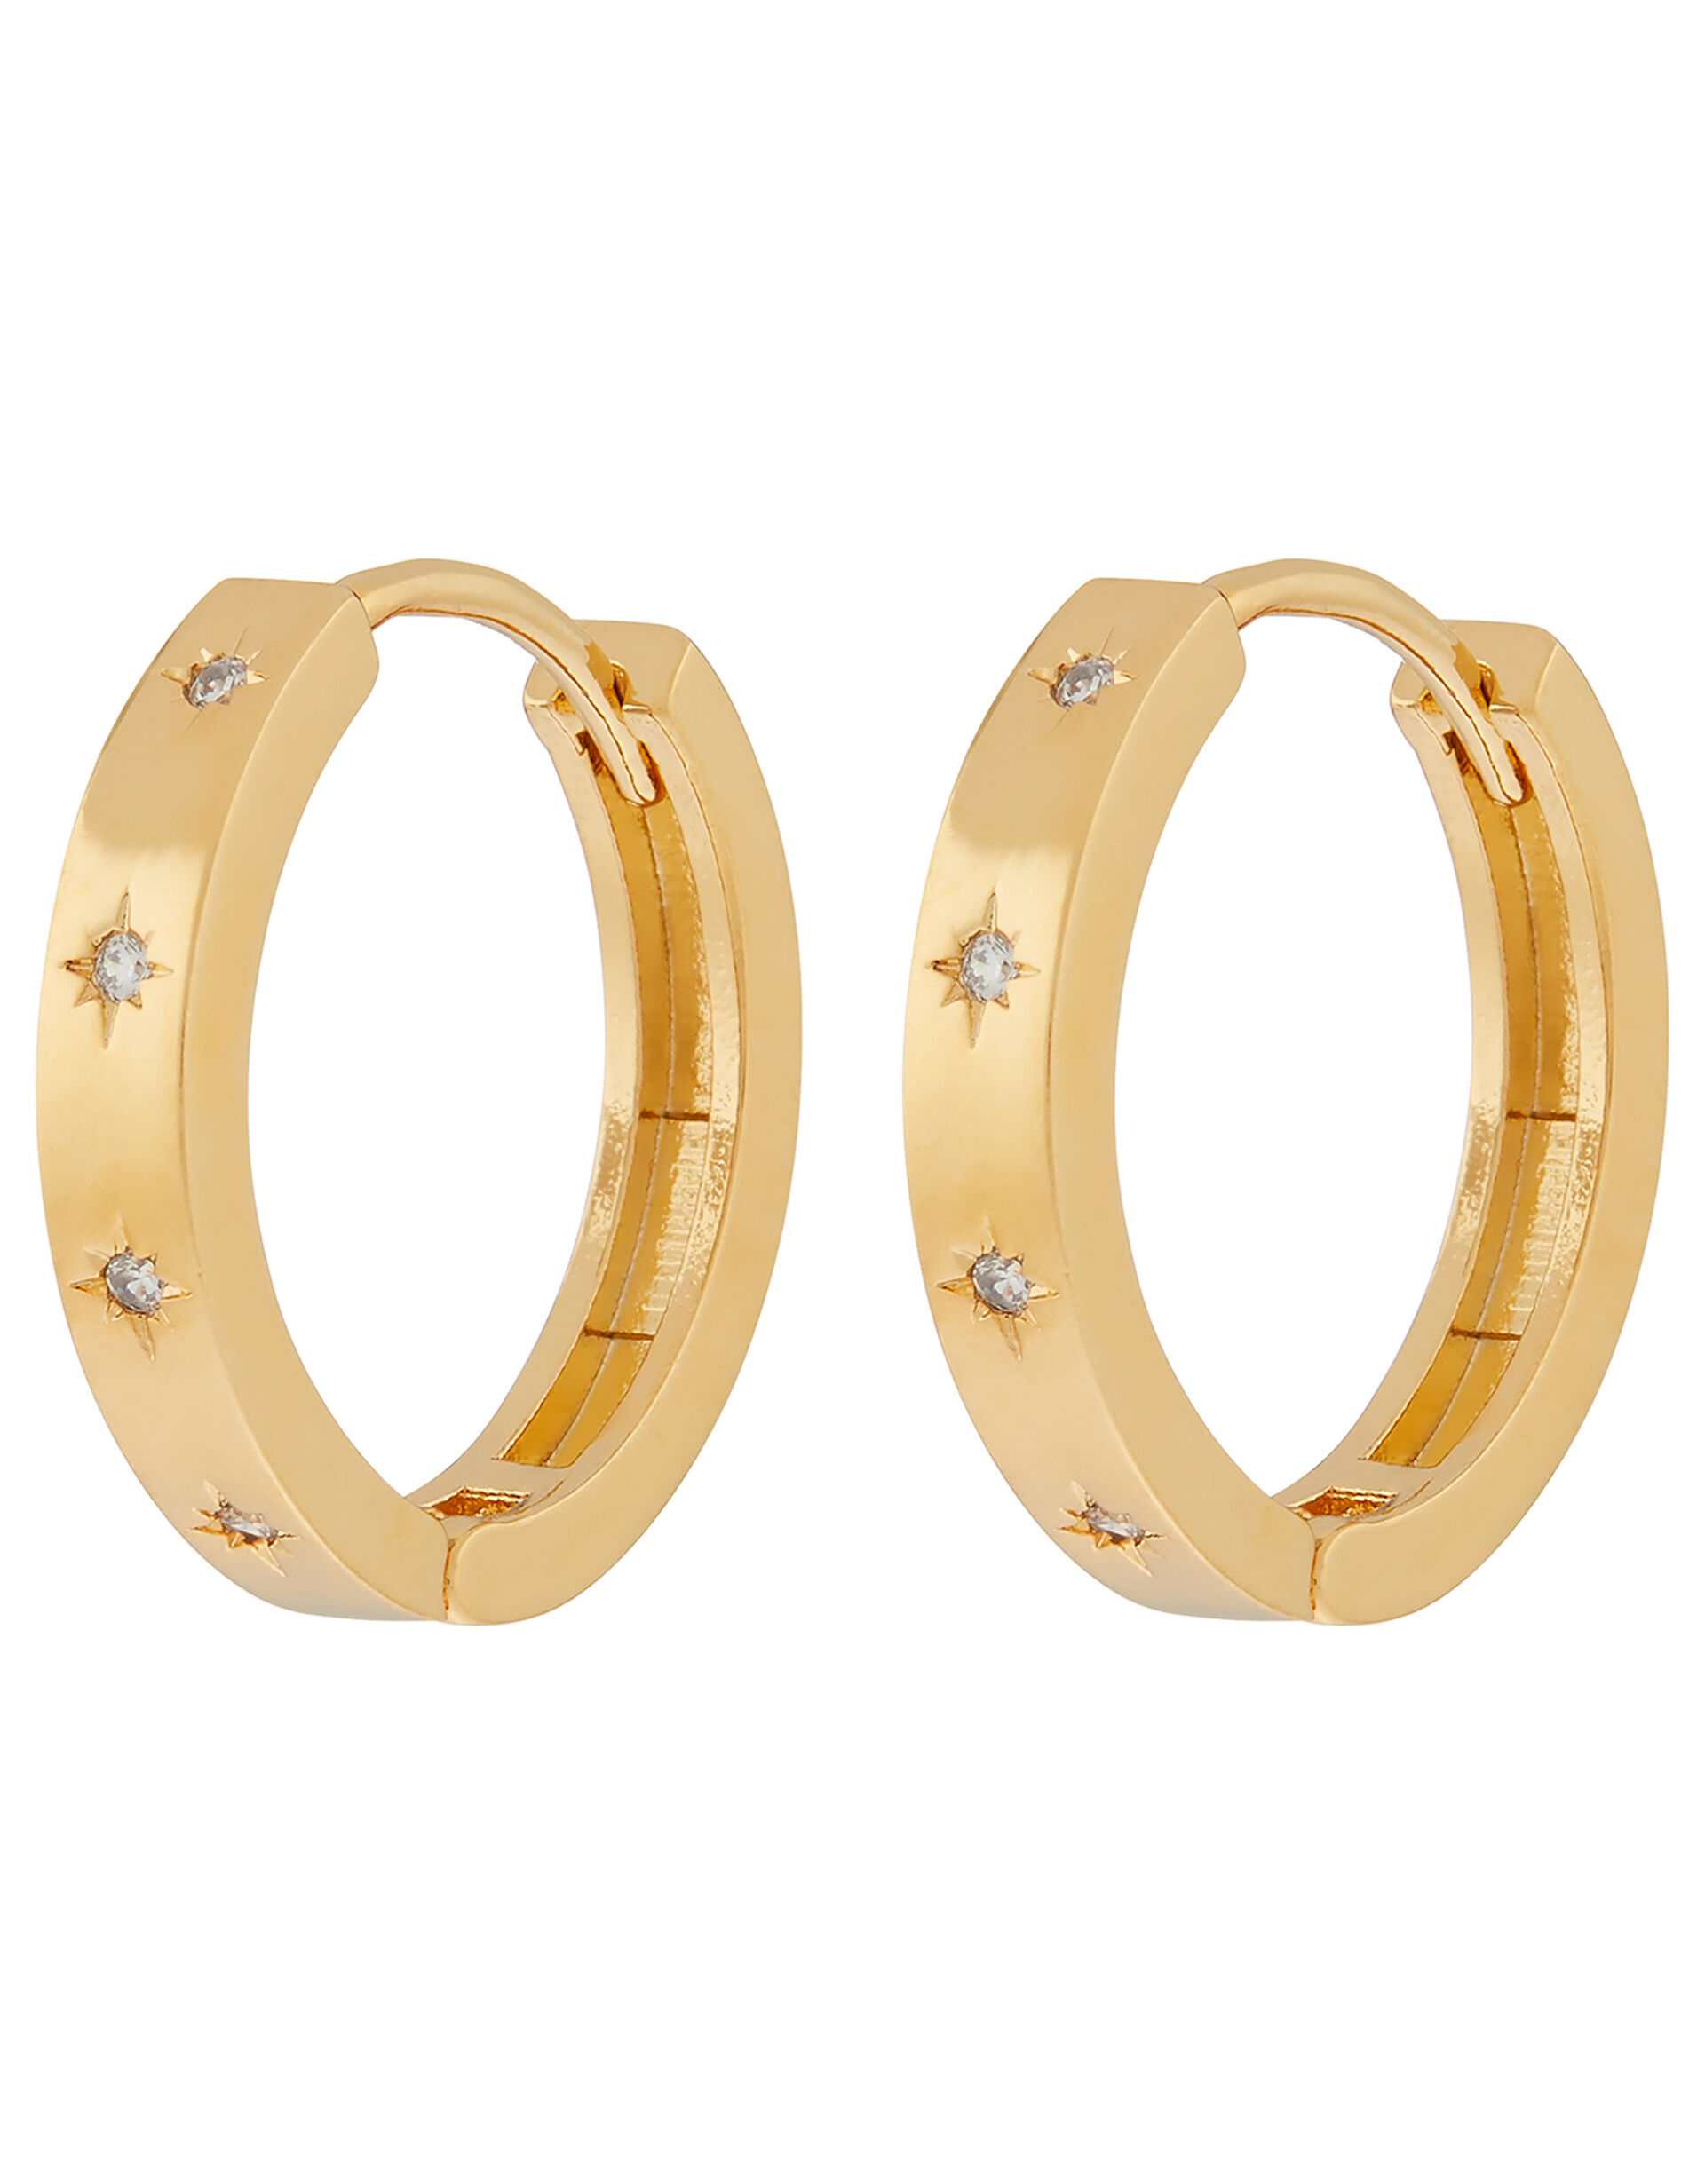 Gold-Plated Star Hoop Earrings, , large